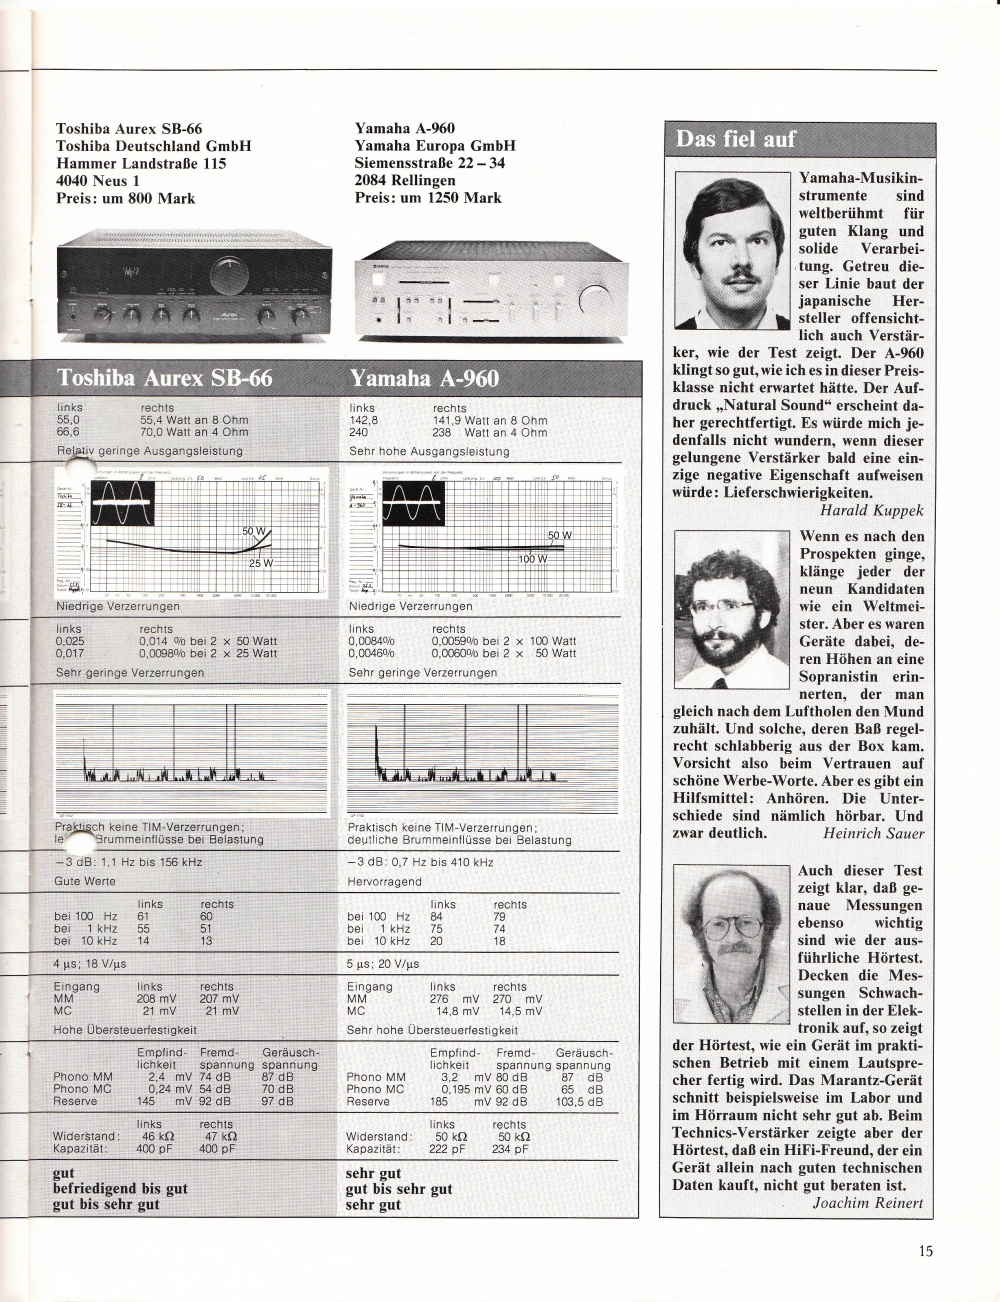 Stereoplay April 1981 9 Verstärker im Vergleich 15.jpg